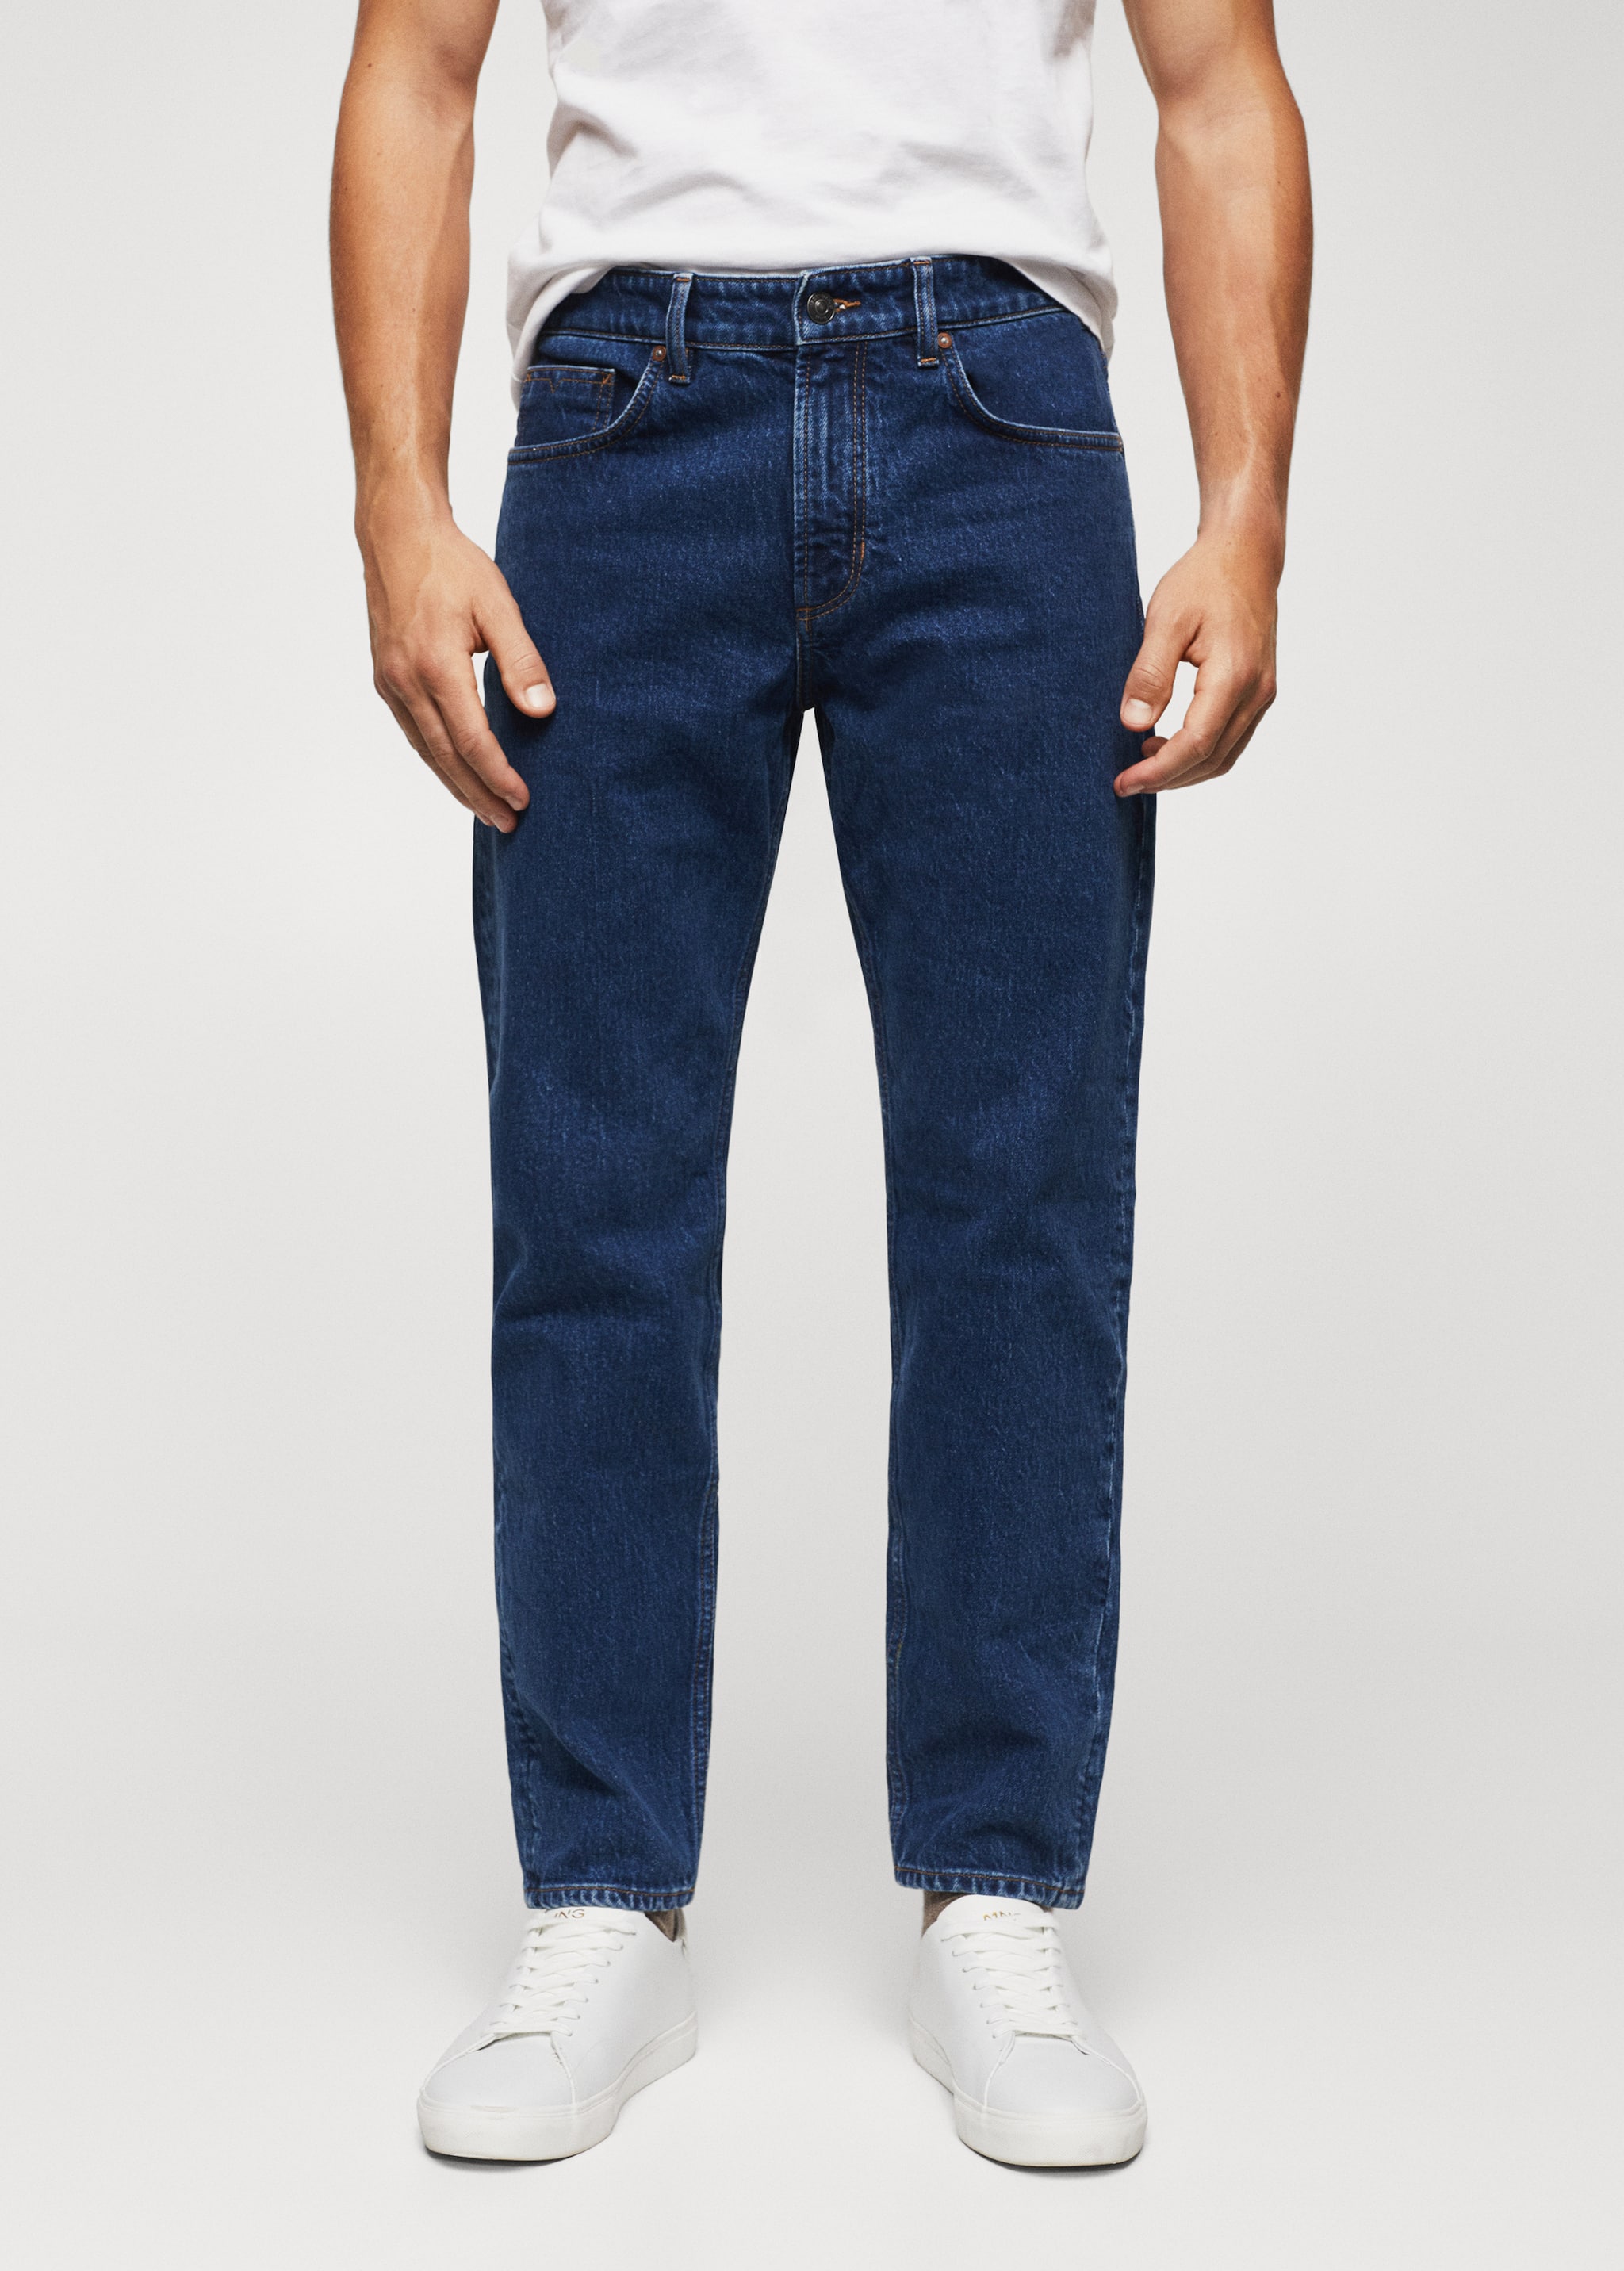 Ben tapered cropped jeans - Middenvlak